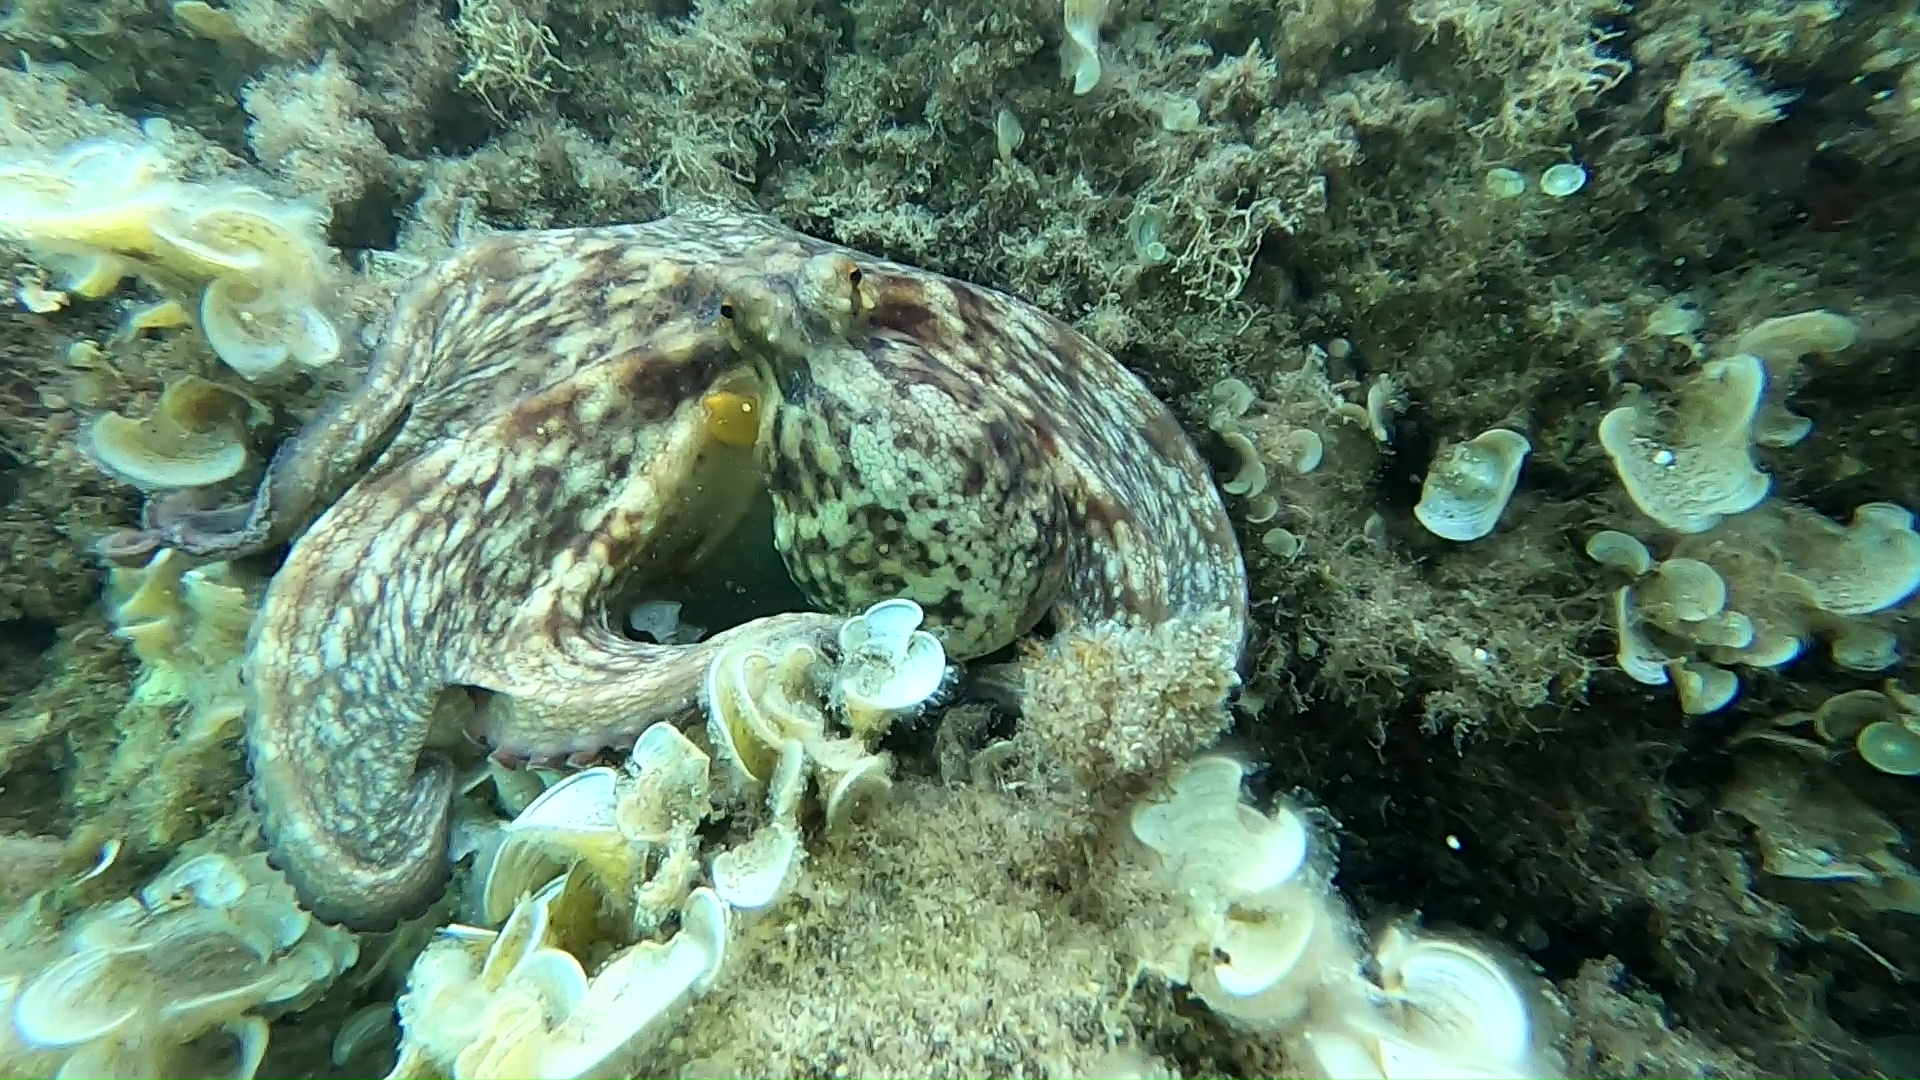 Polpo Mimetismo Octopus Mimicry intotheblue.it